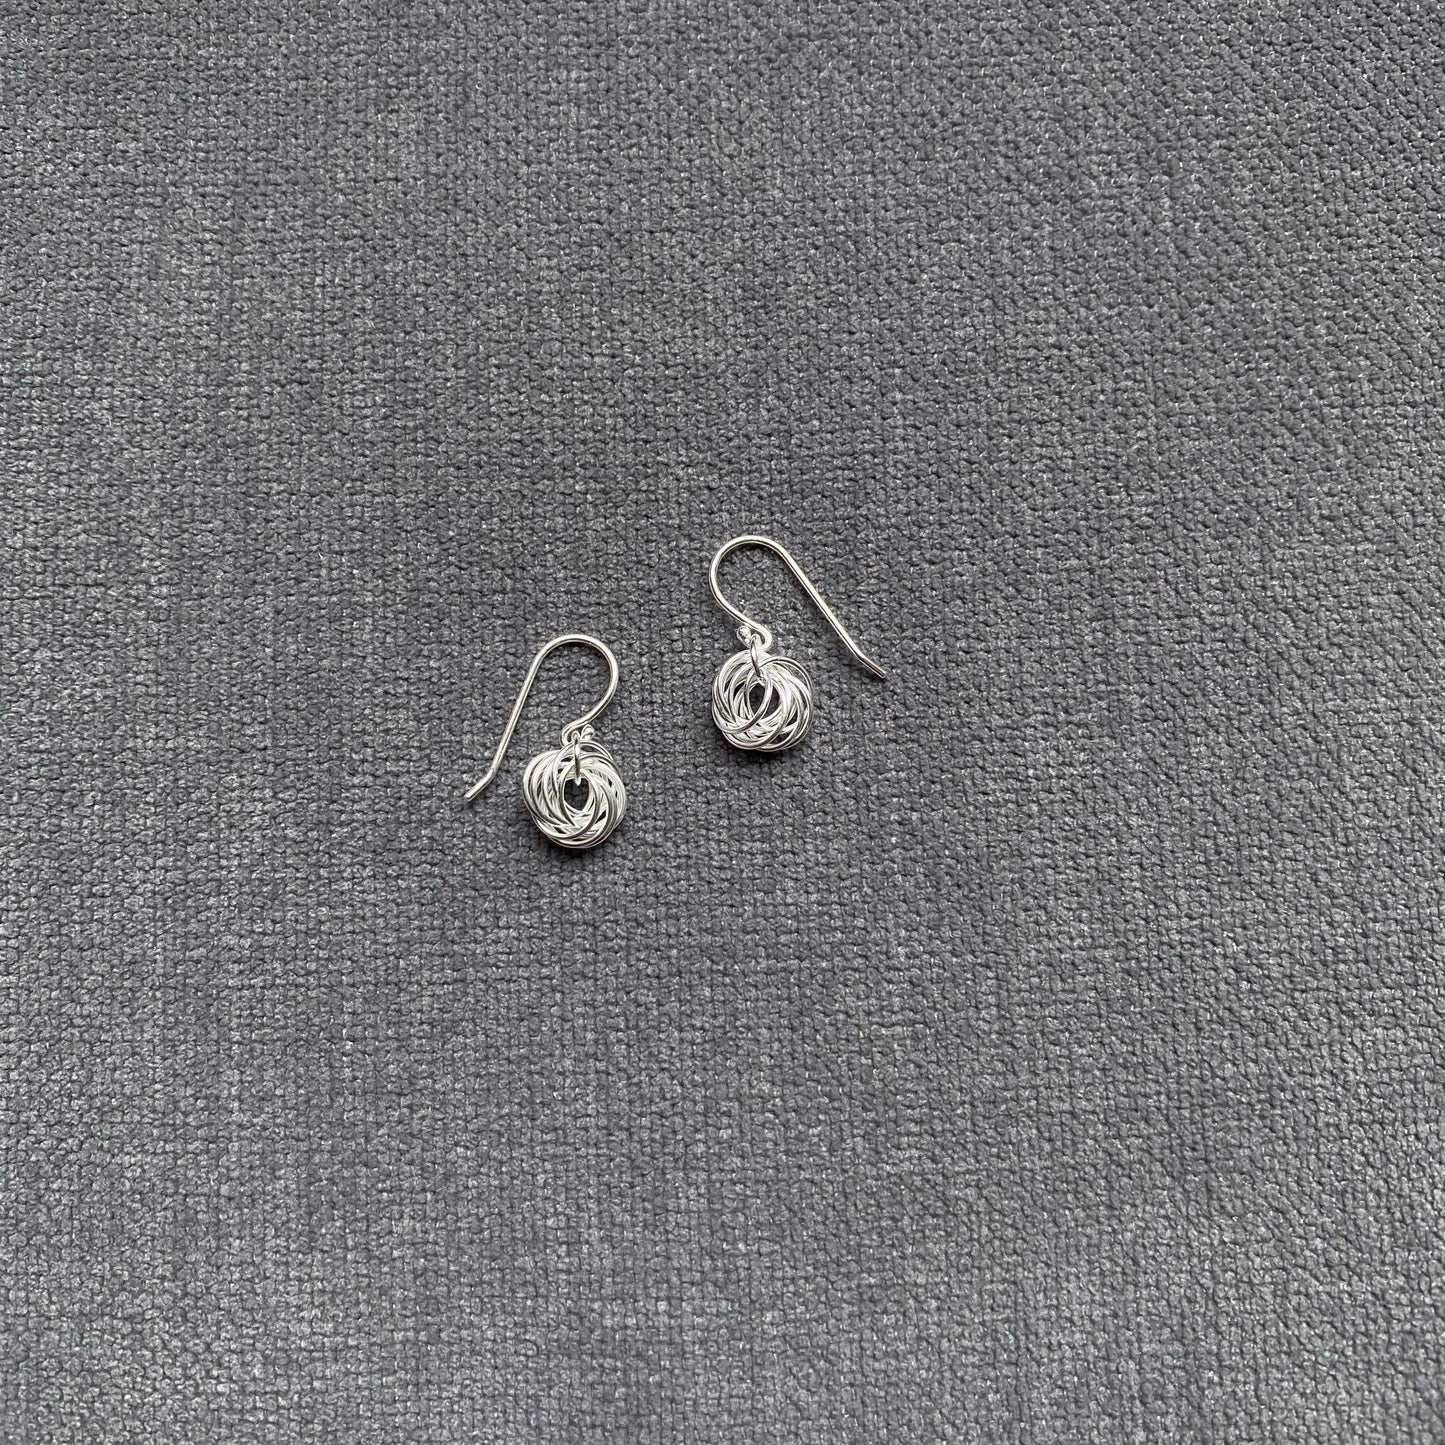 Tangled (Small) Earrings